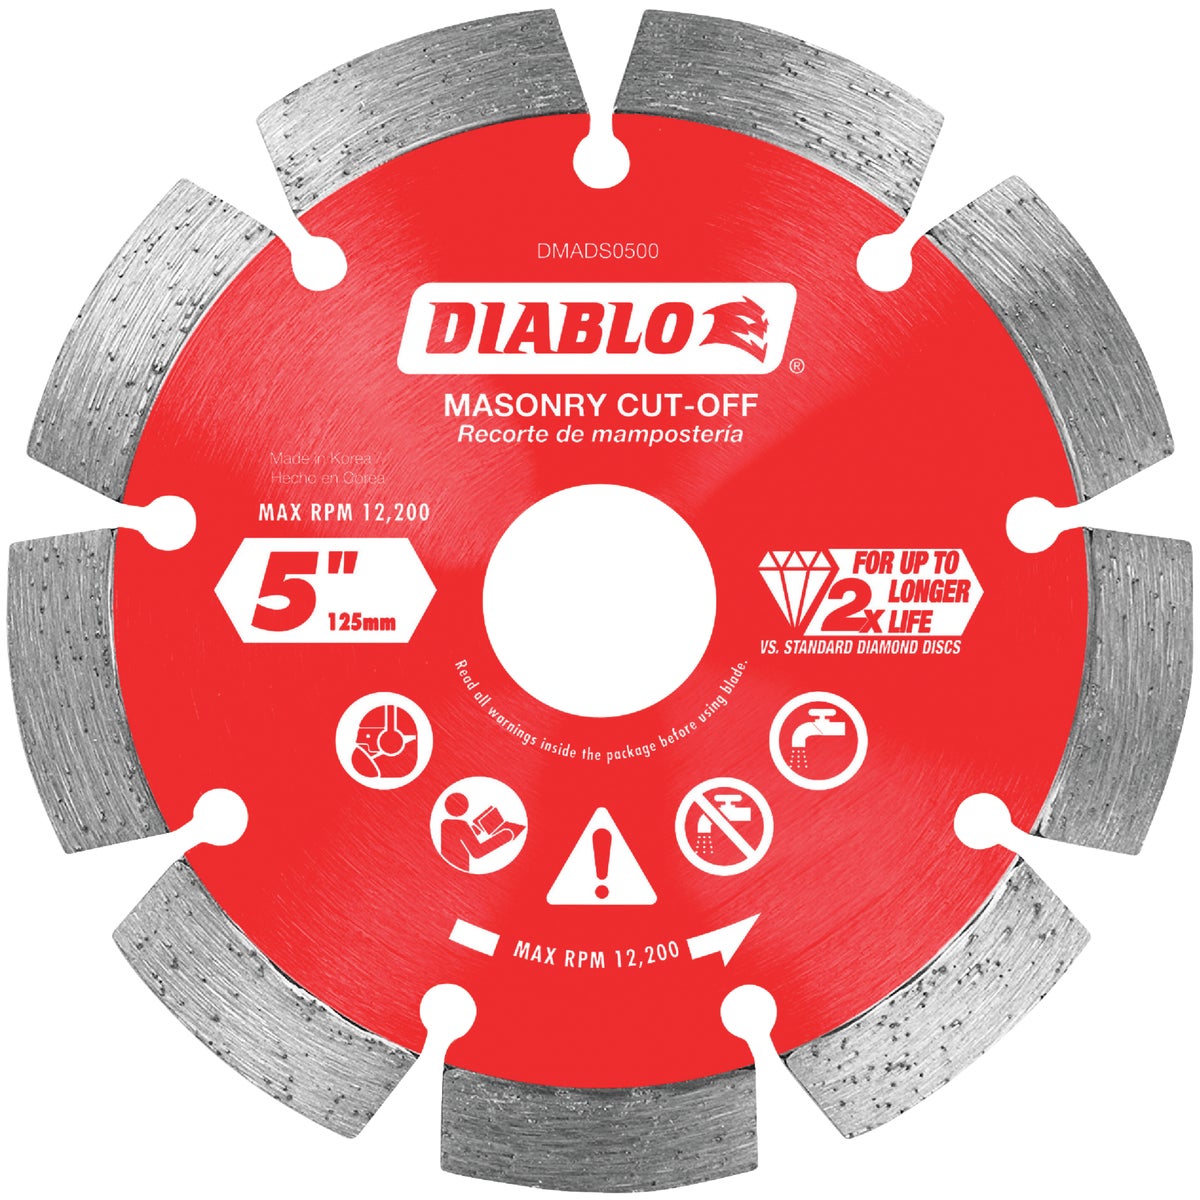 Diablo 5 In. Segmented Rim Dry/Wet Cut Diamond Blade